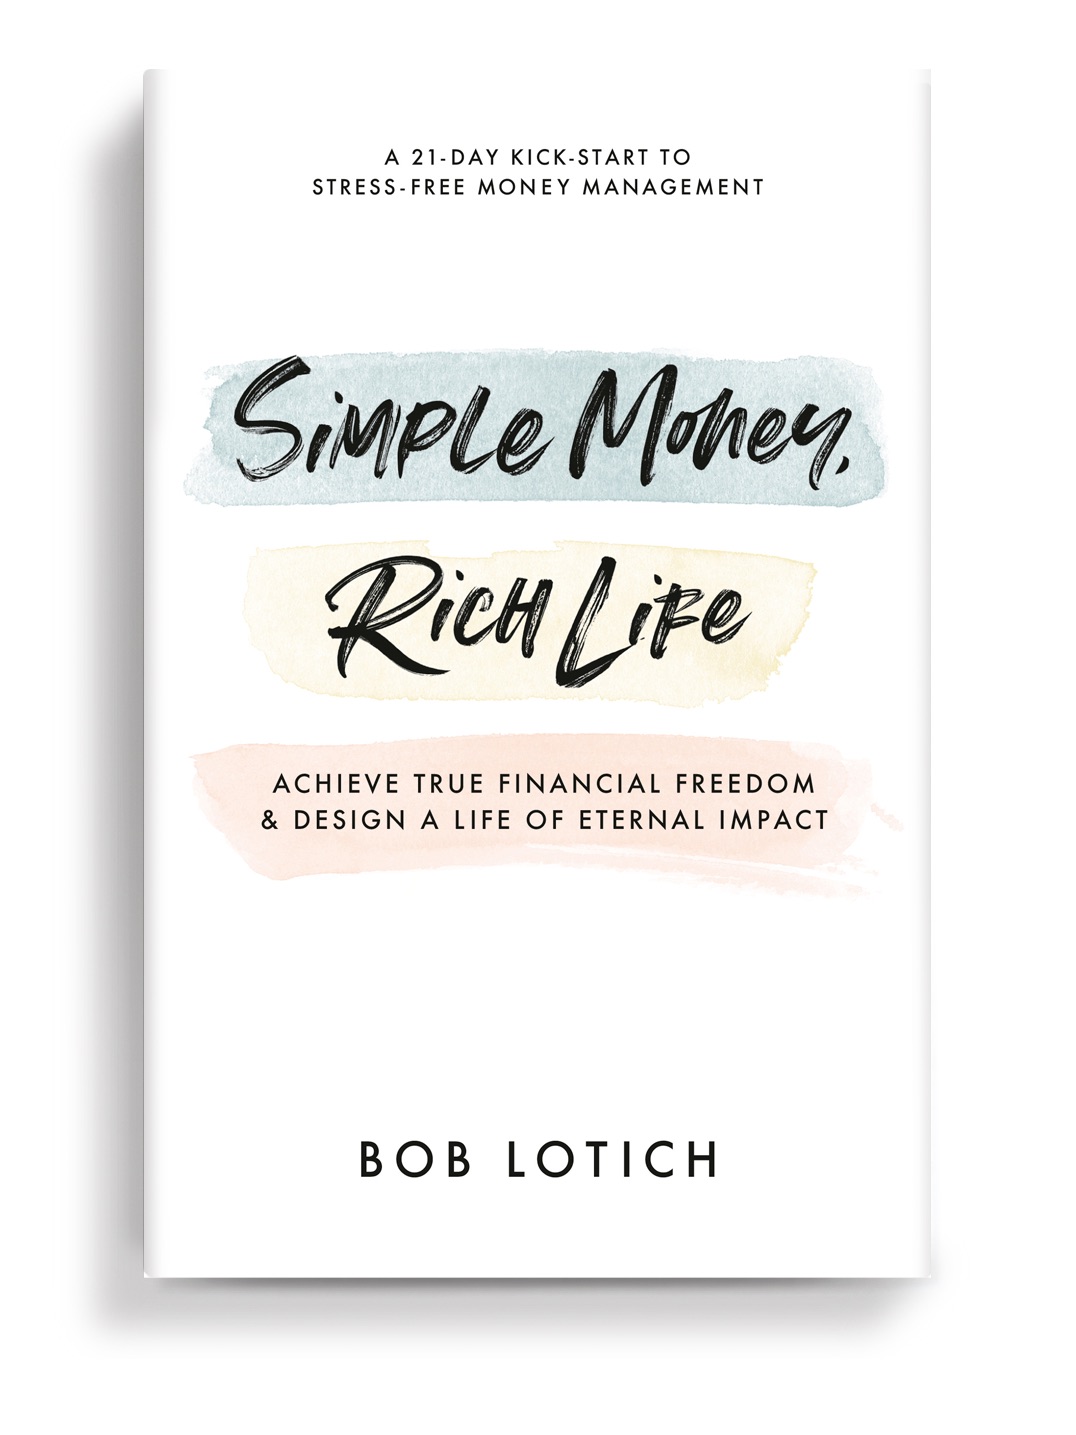 Simple Money Rich Life by Bob Lotich